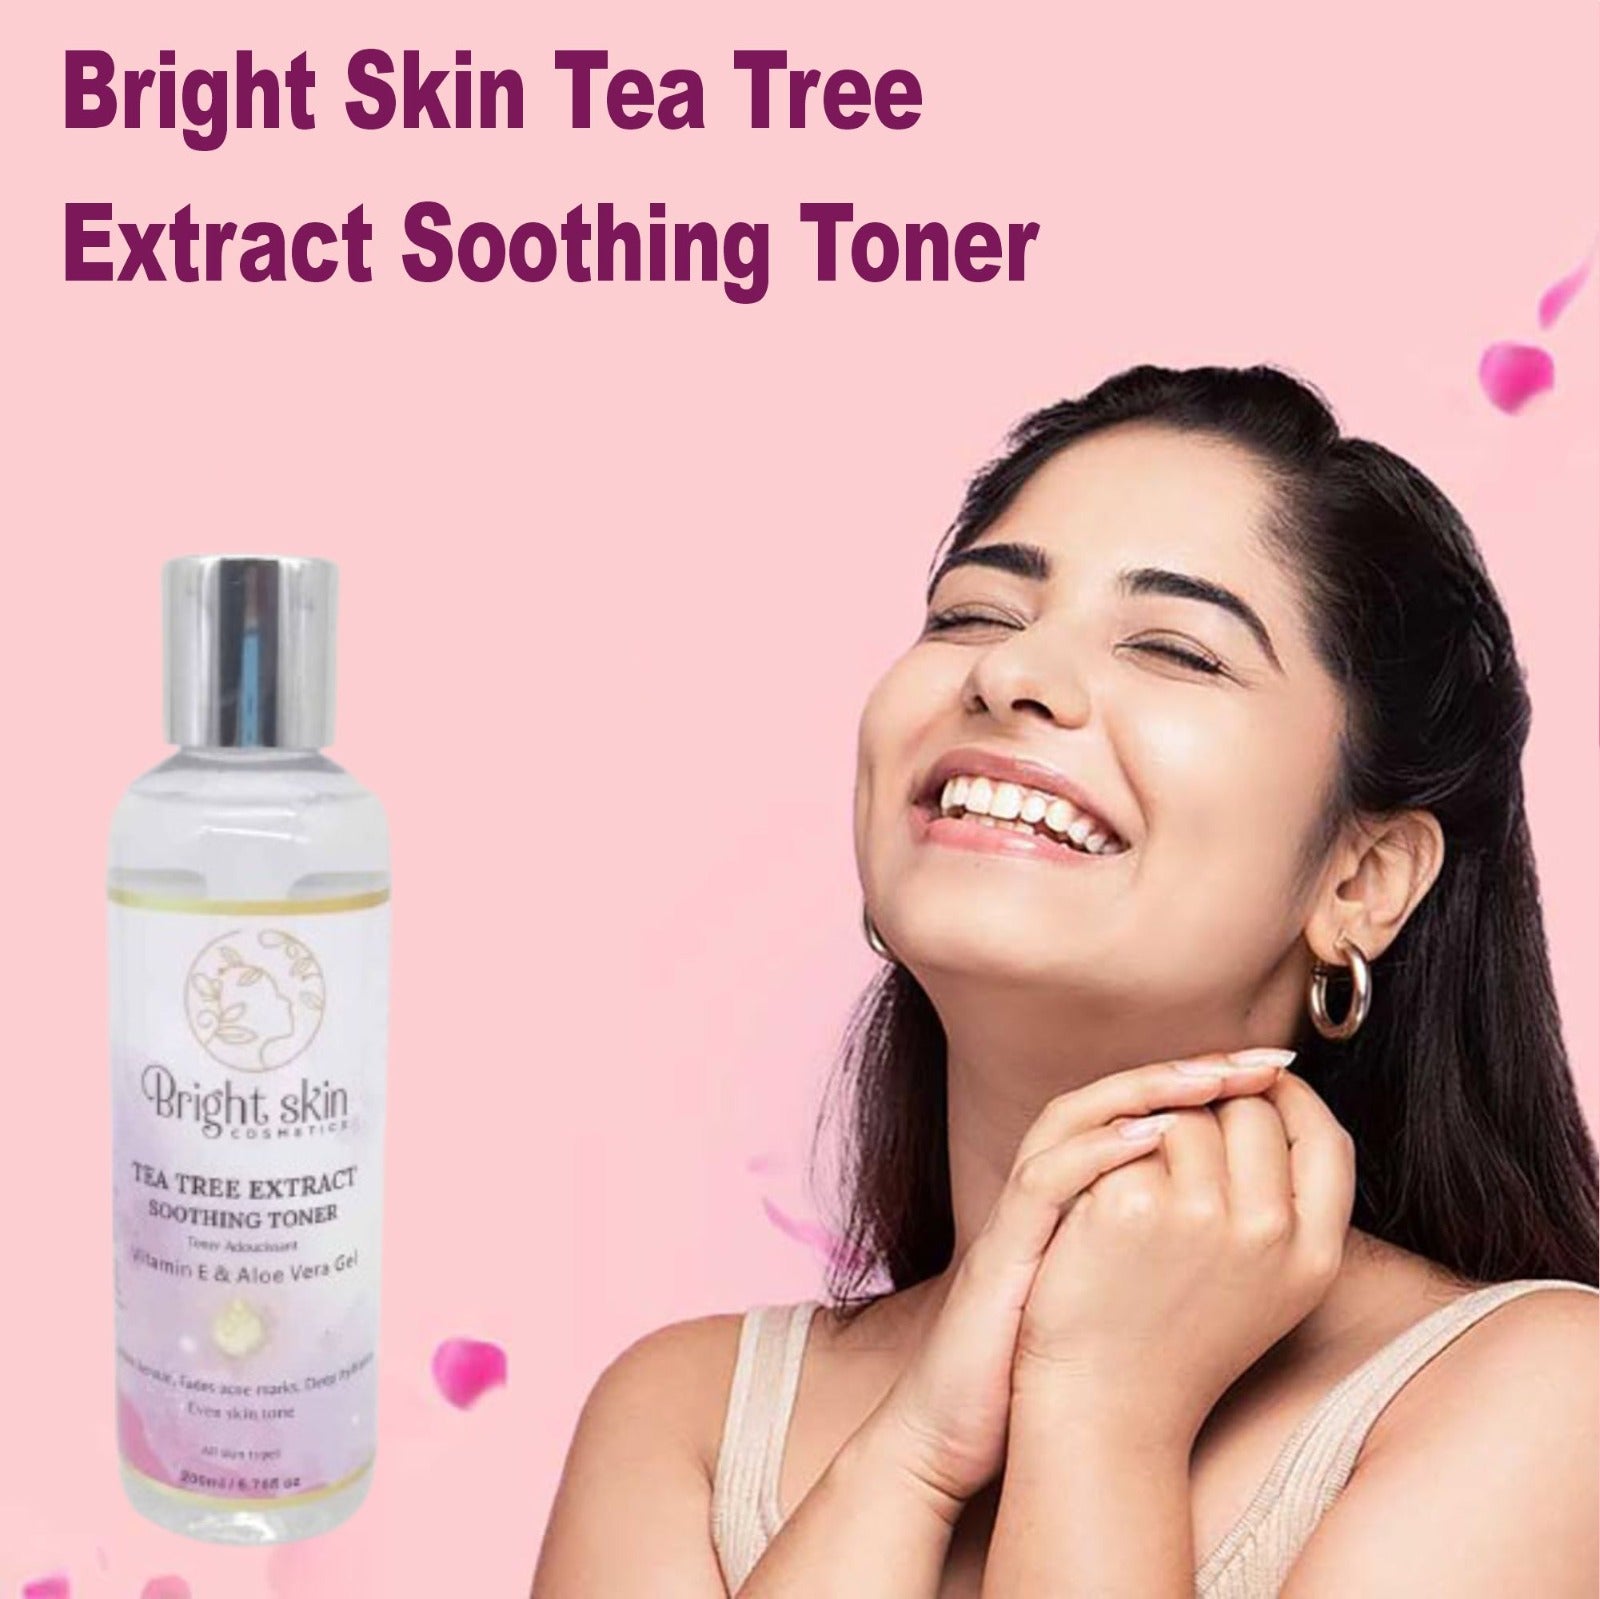 Bright Skin Tea Tree Extract Soothing Toner